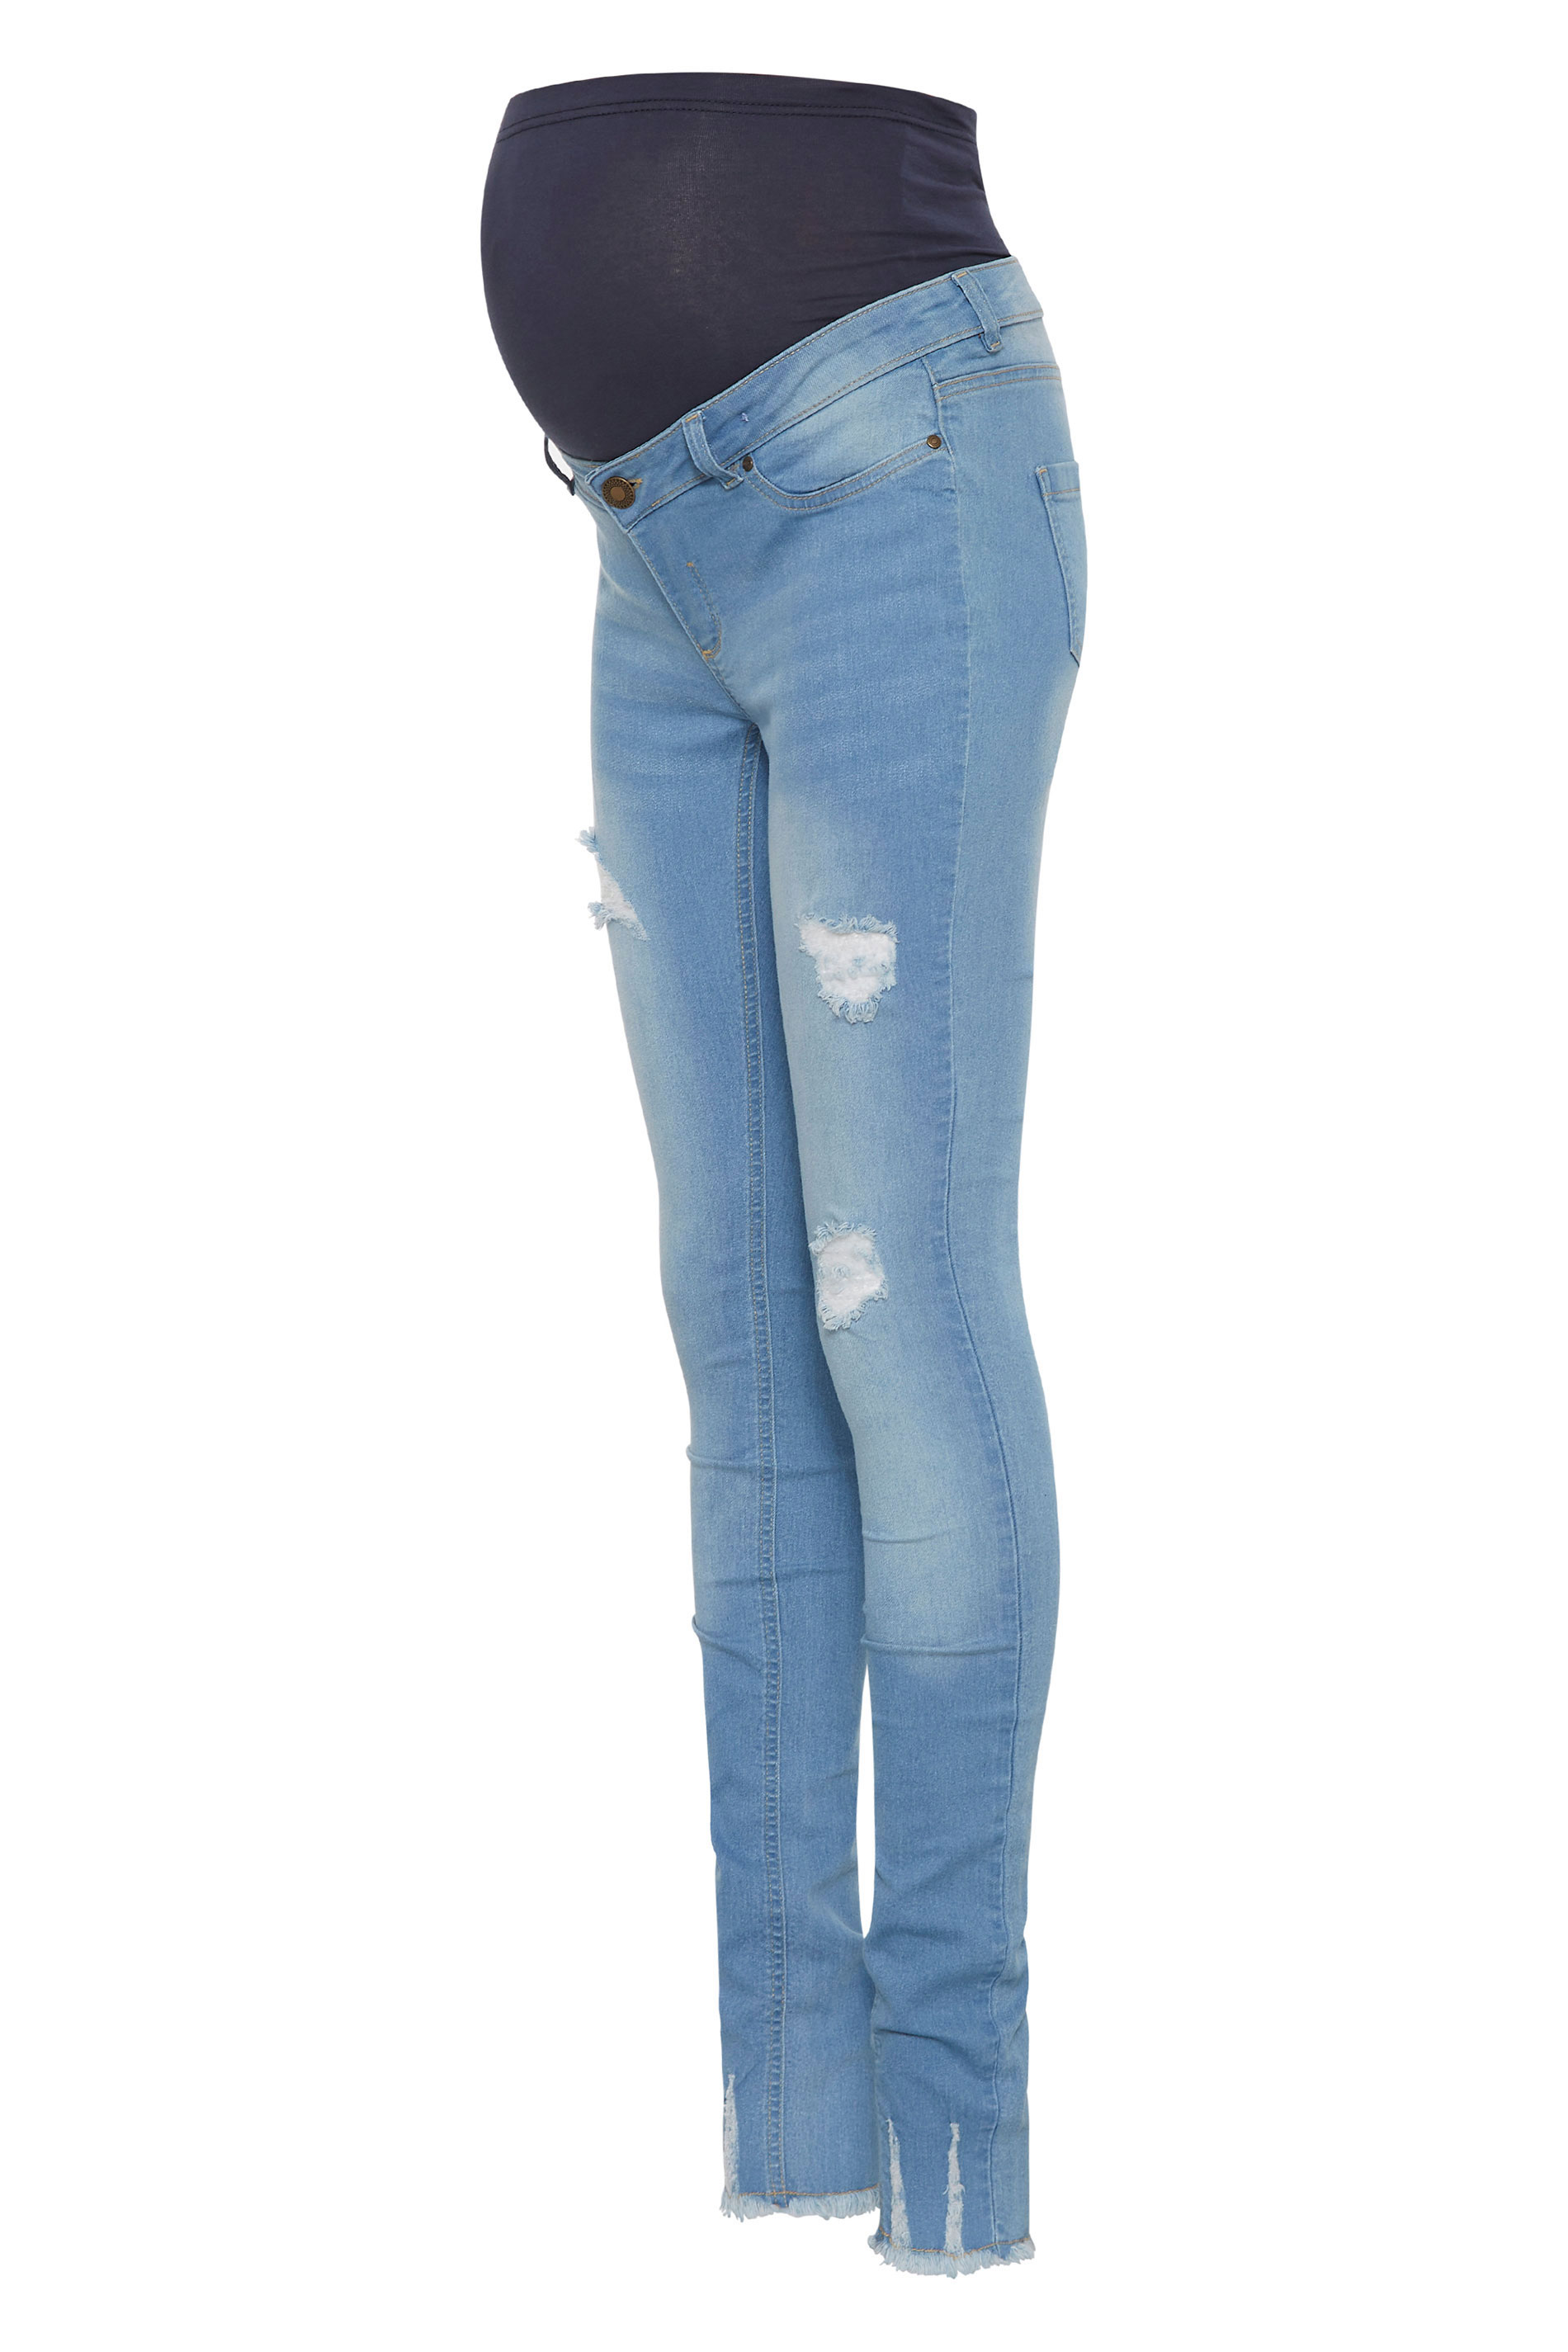 Tall Women's LTS Maternity Blue Distressed Skinny Jeans | Long Tall Sally 2